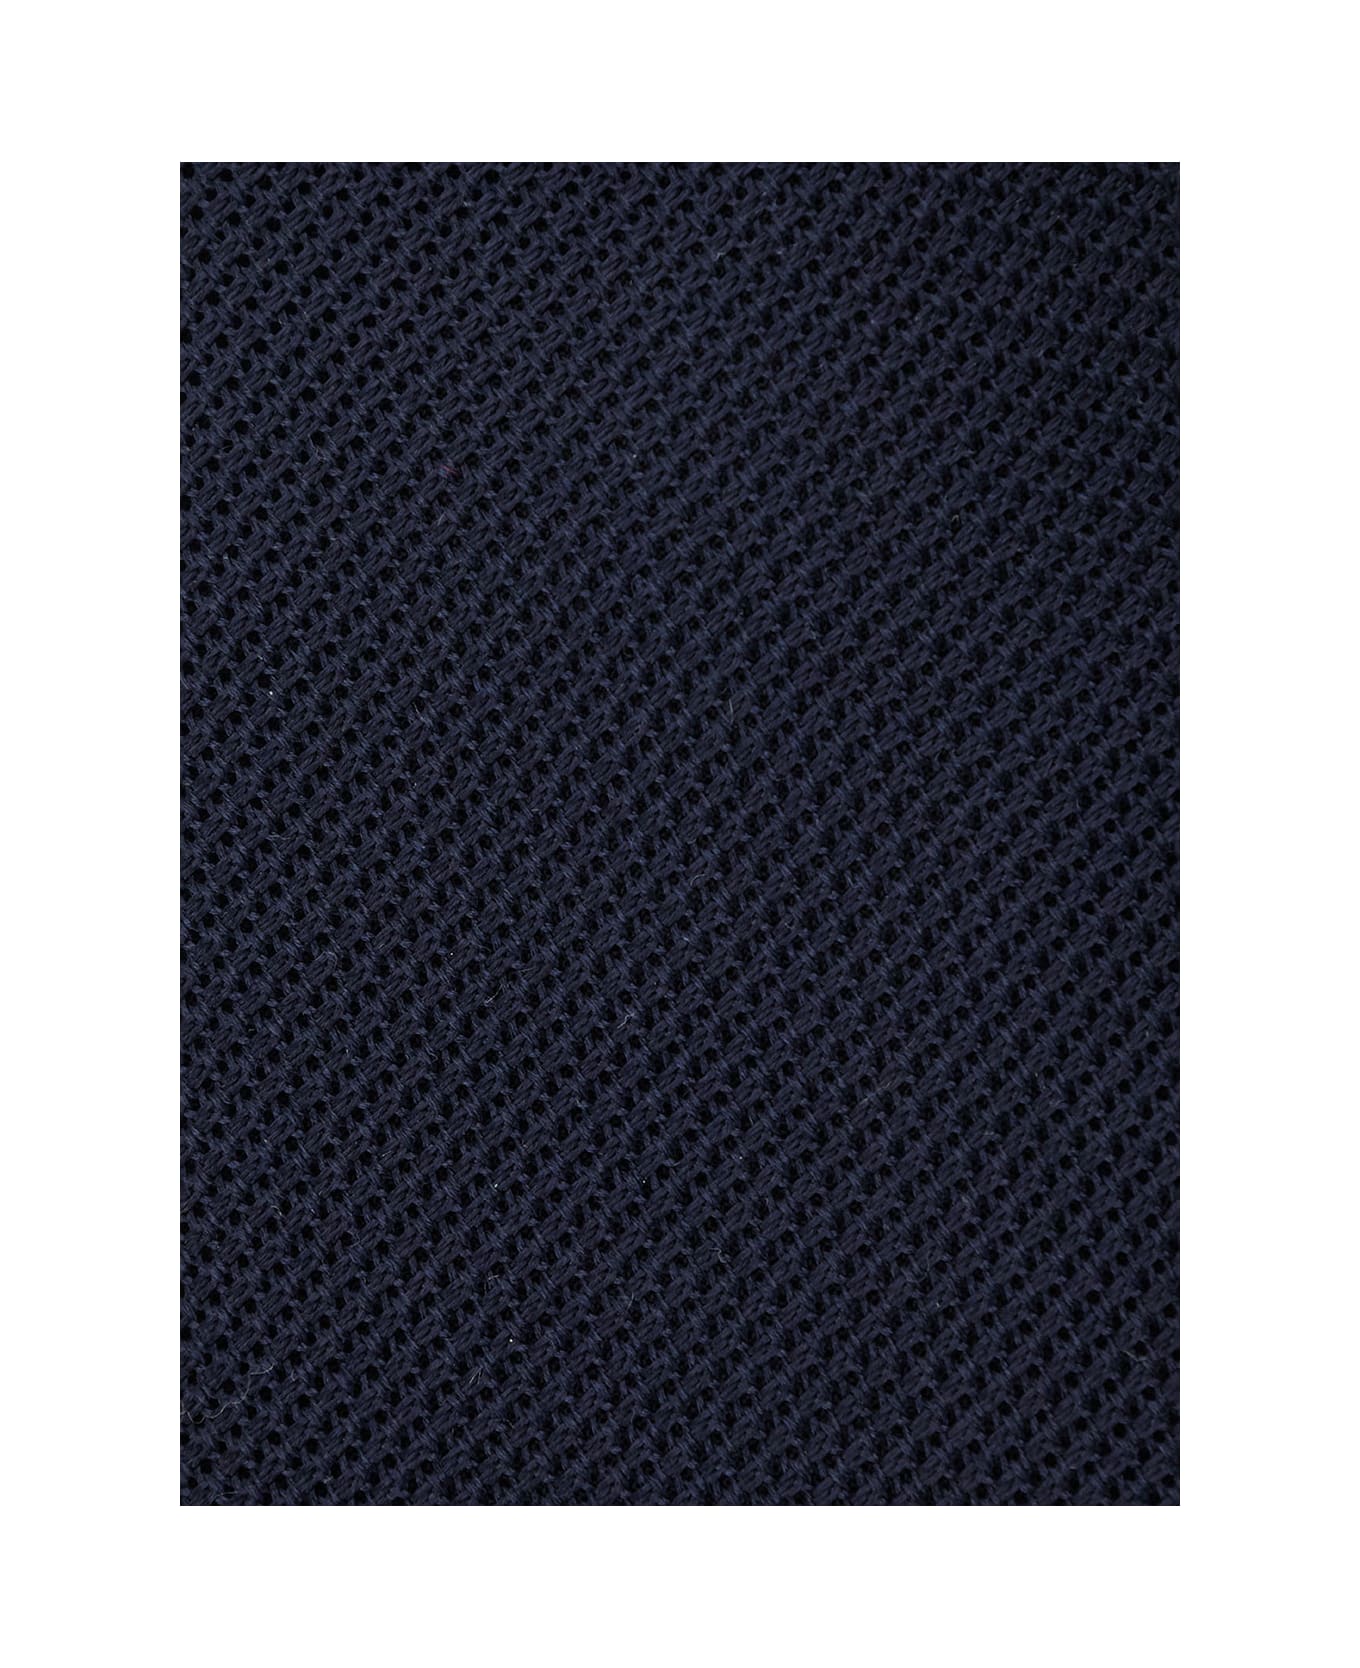 Tagliatore Cravatta 7cm Seta - BLUE